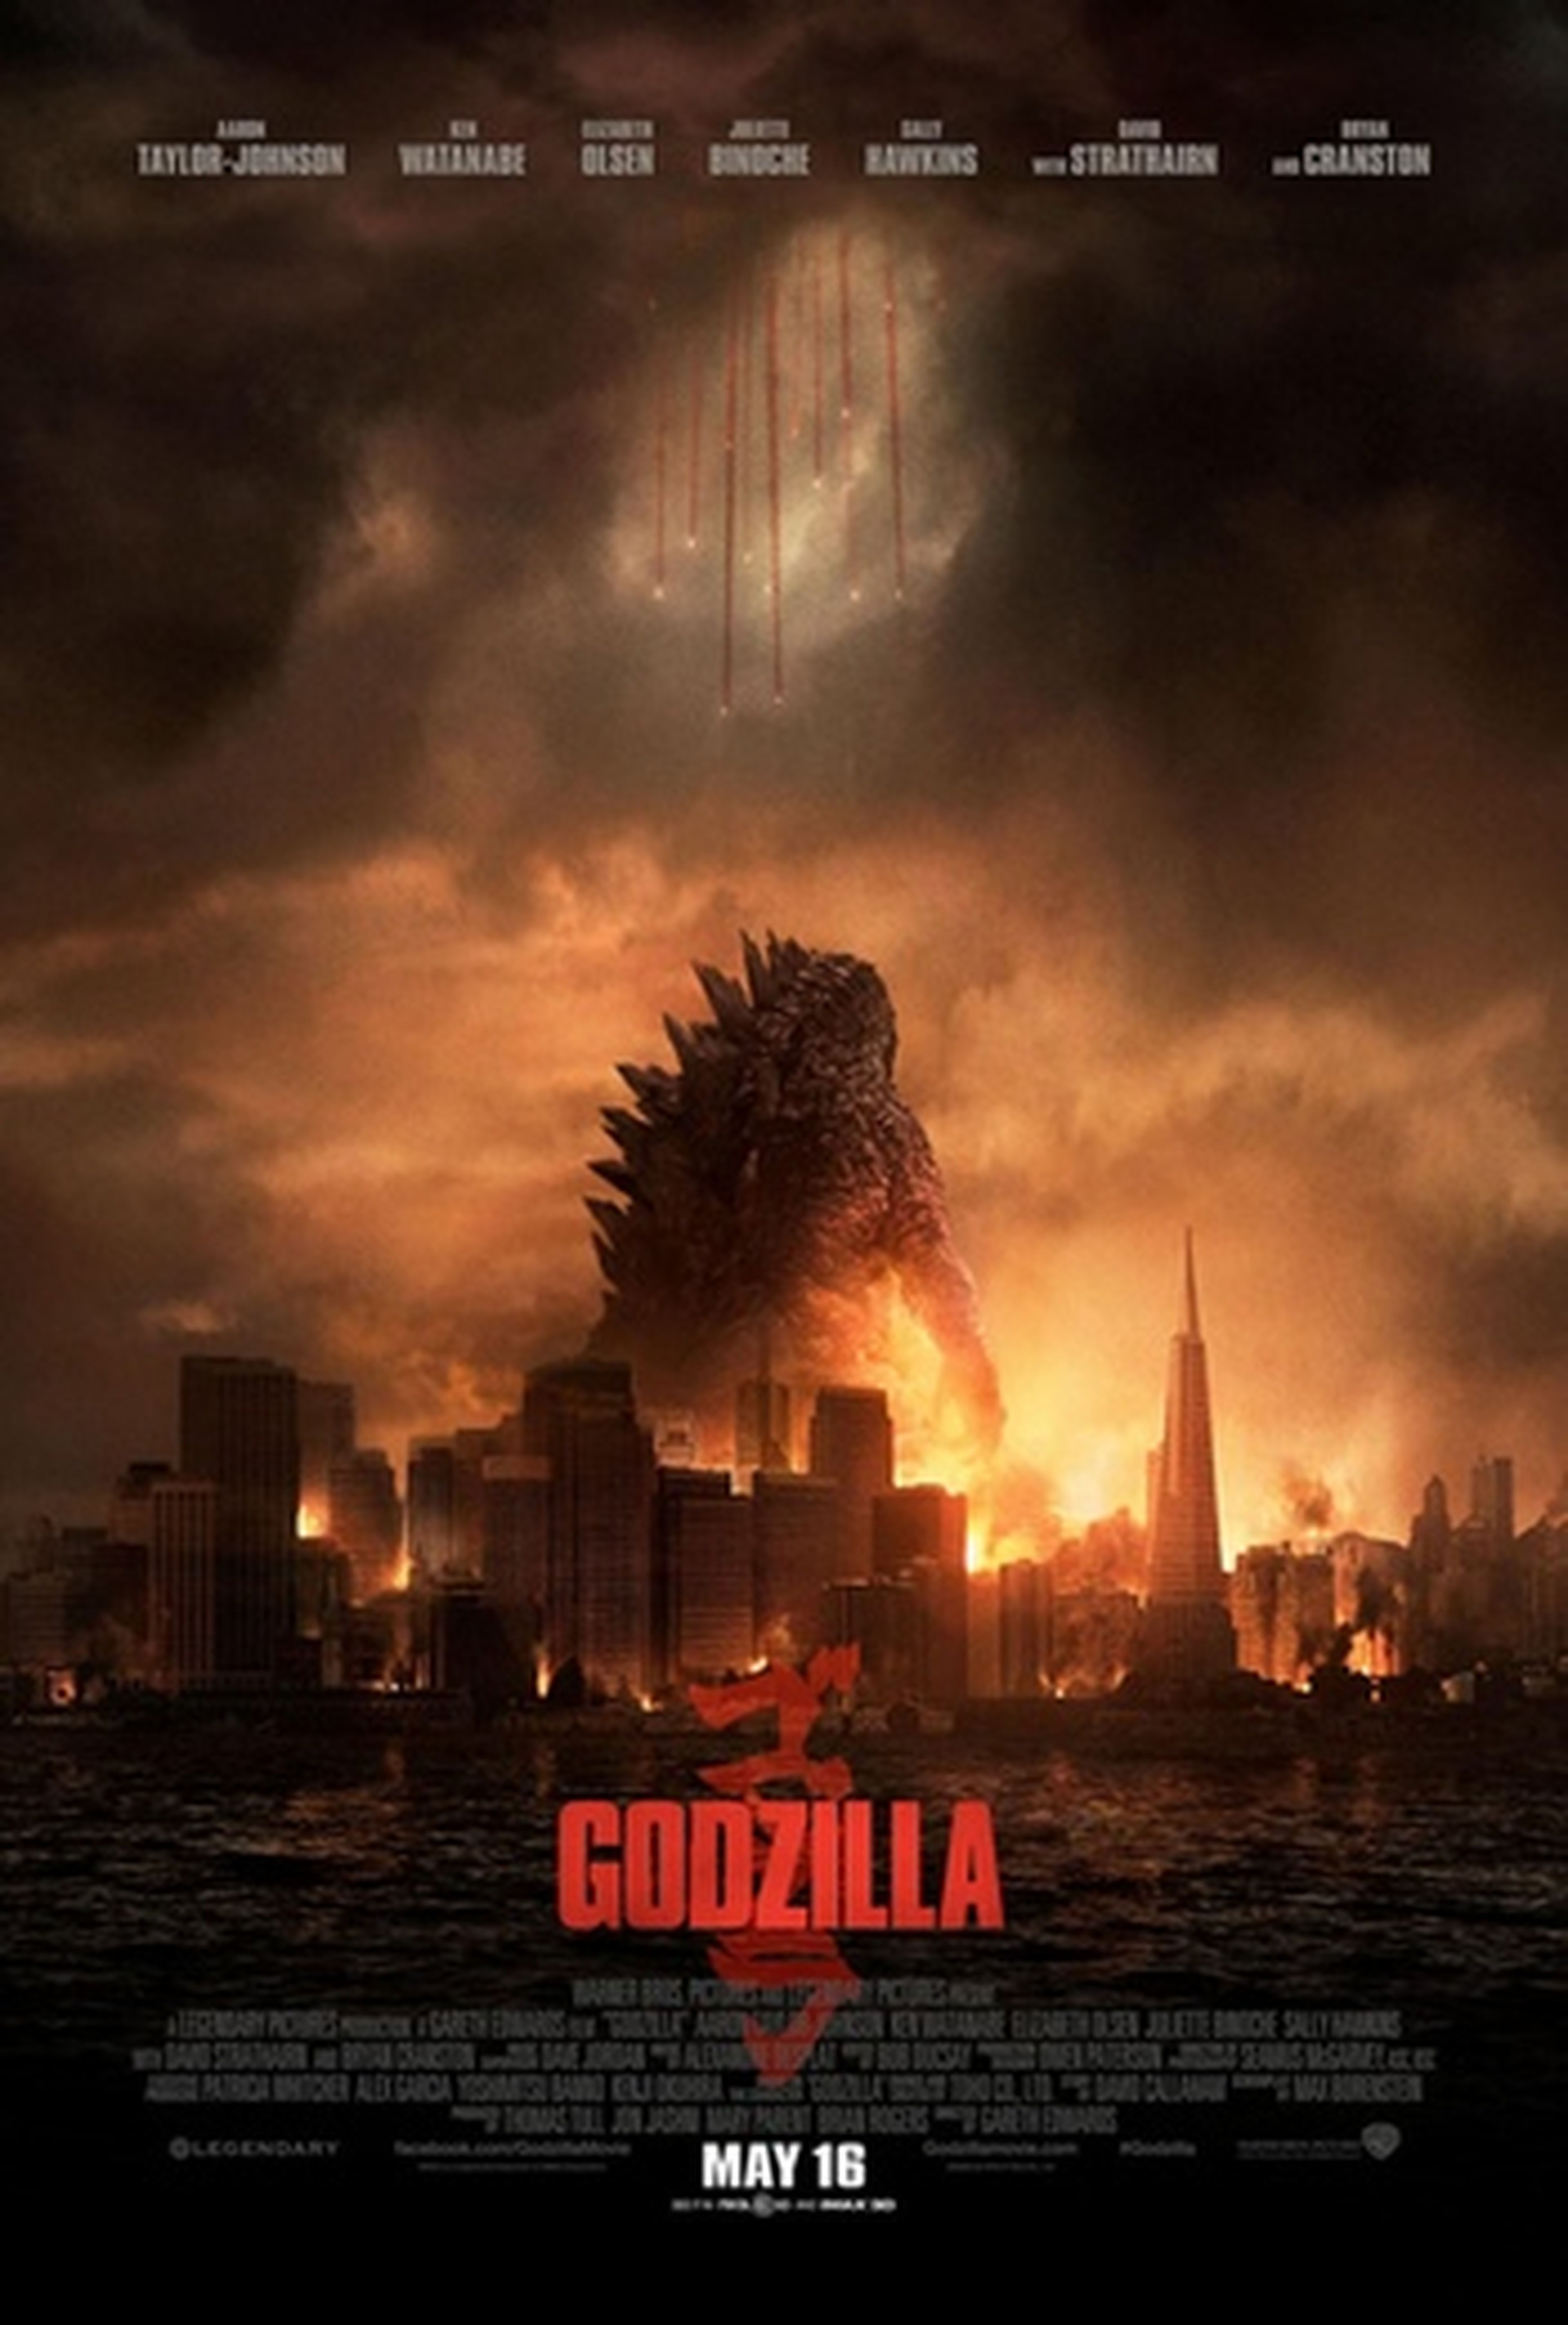 Nuevo tráiler de Godzilla ¡espectacular!